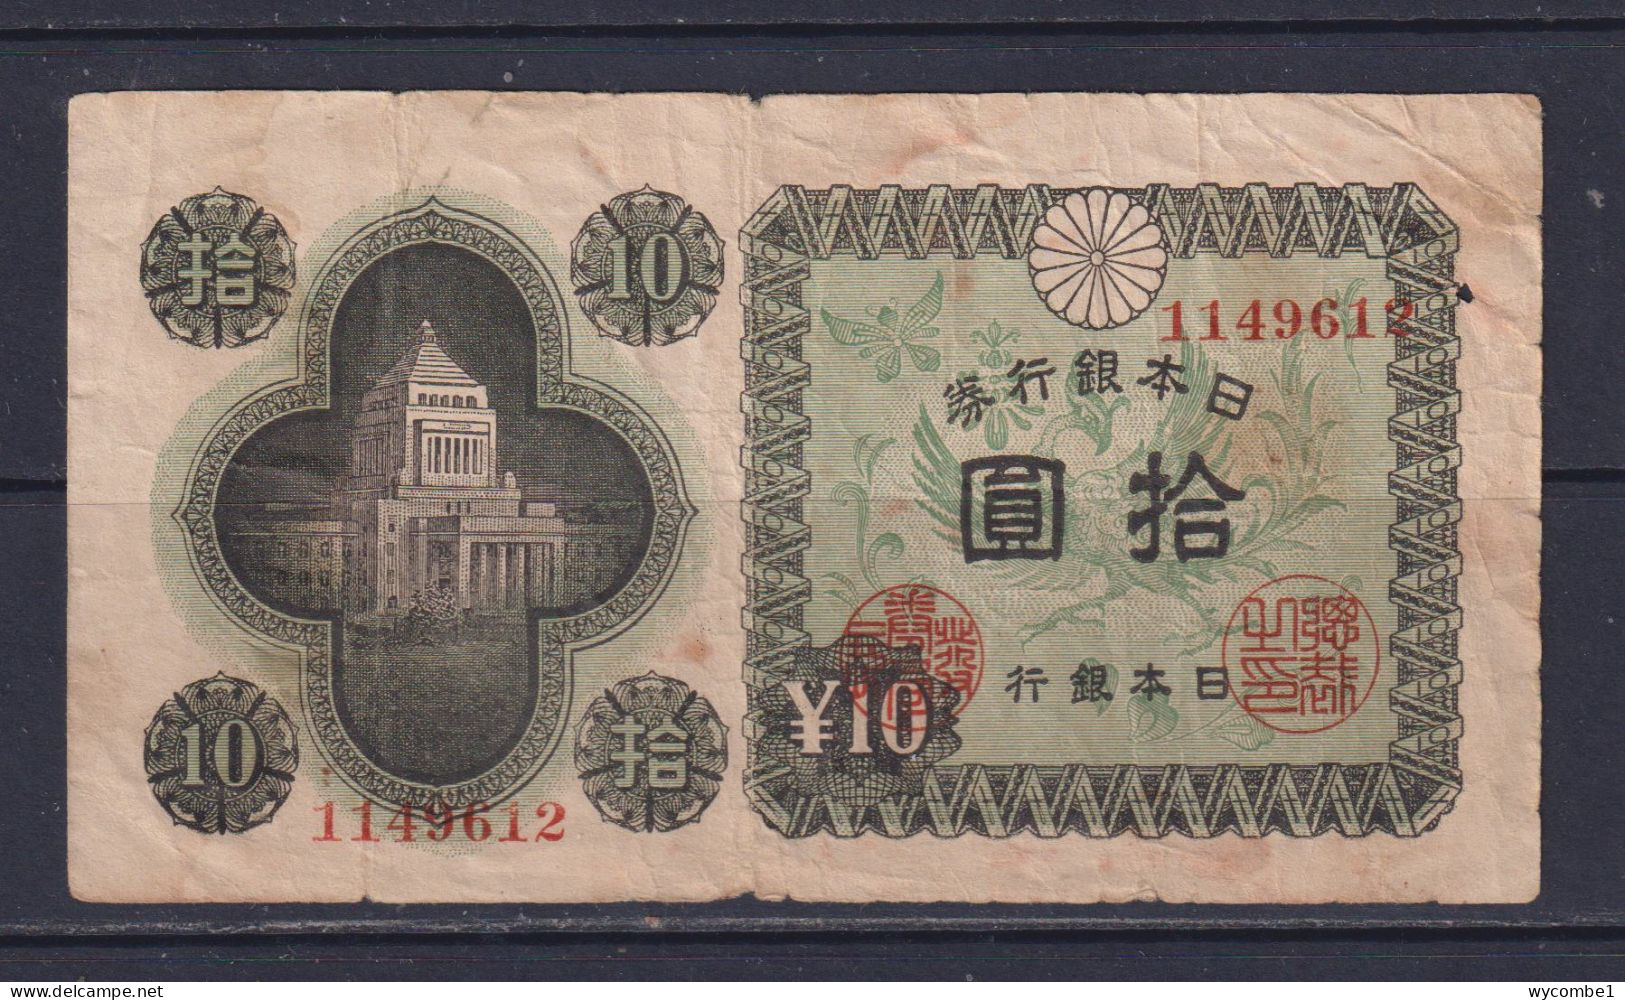 JAPAN - 1946 10 Yen Circulated Banknote - Japan